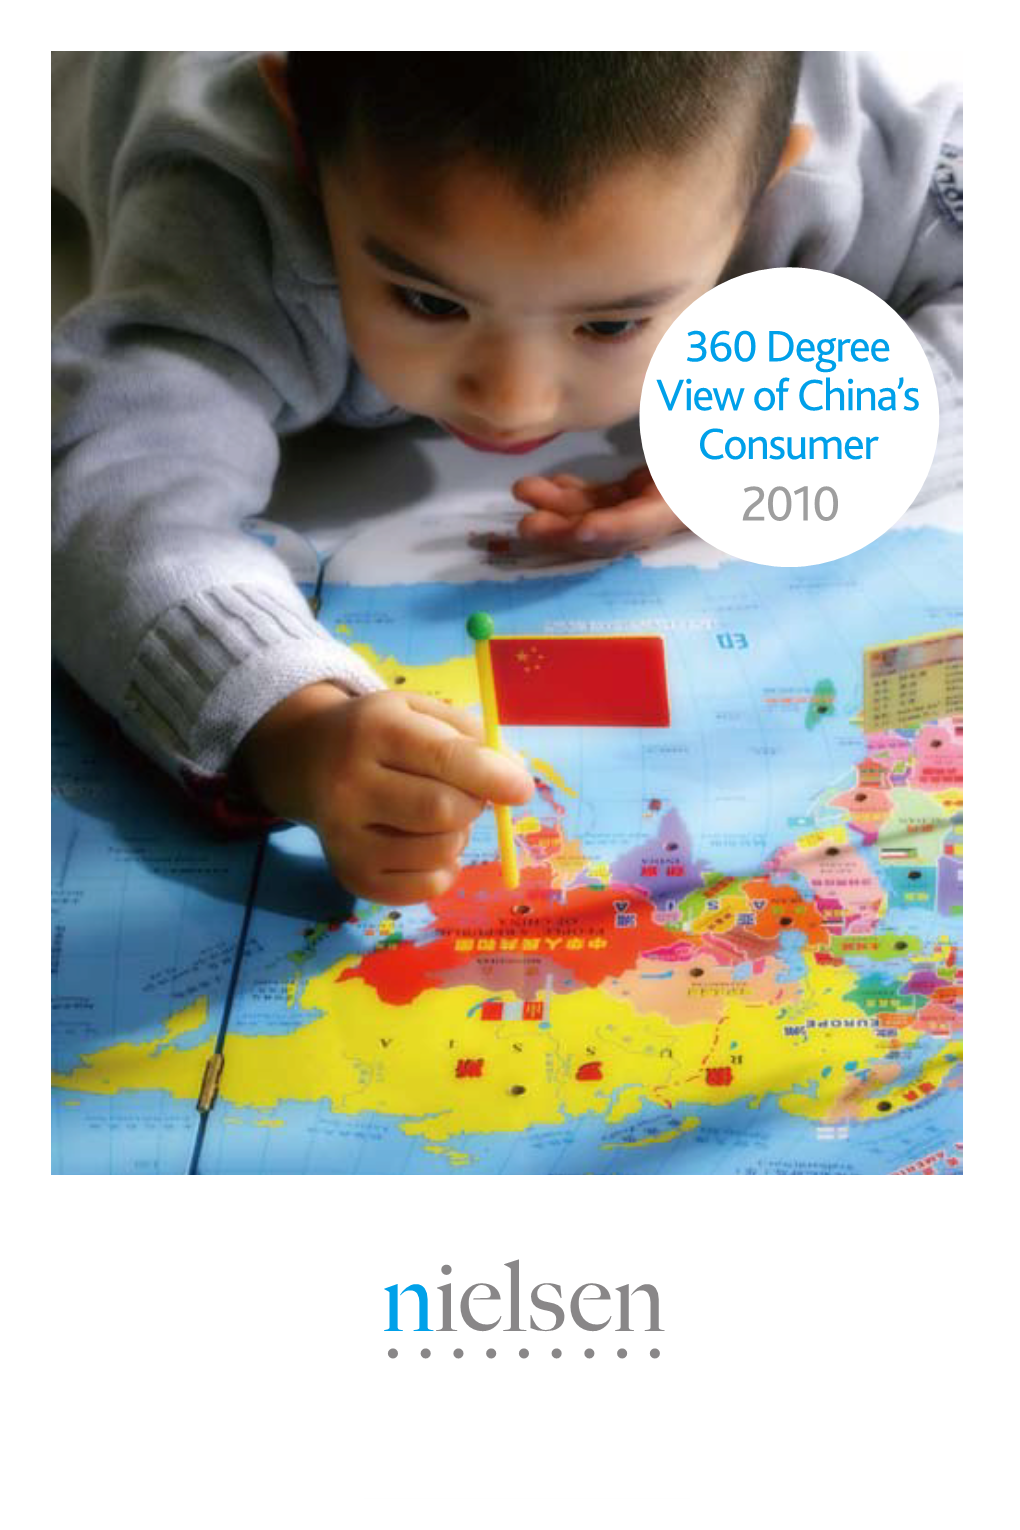 360 Degree View of China's Consumer